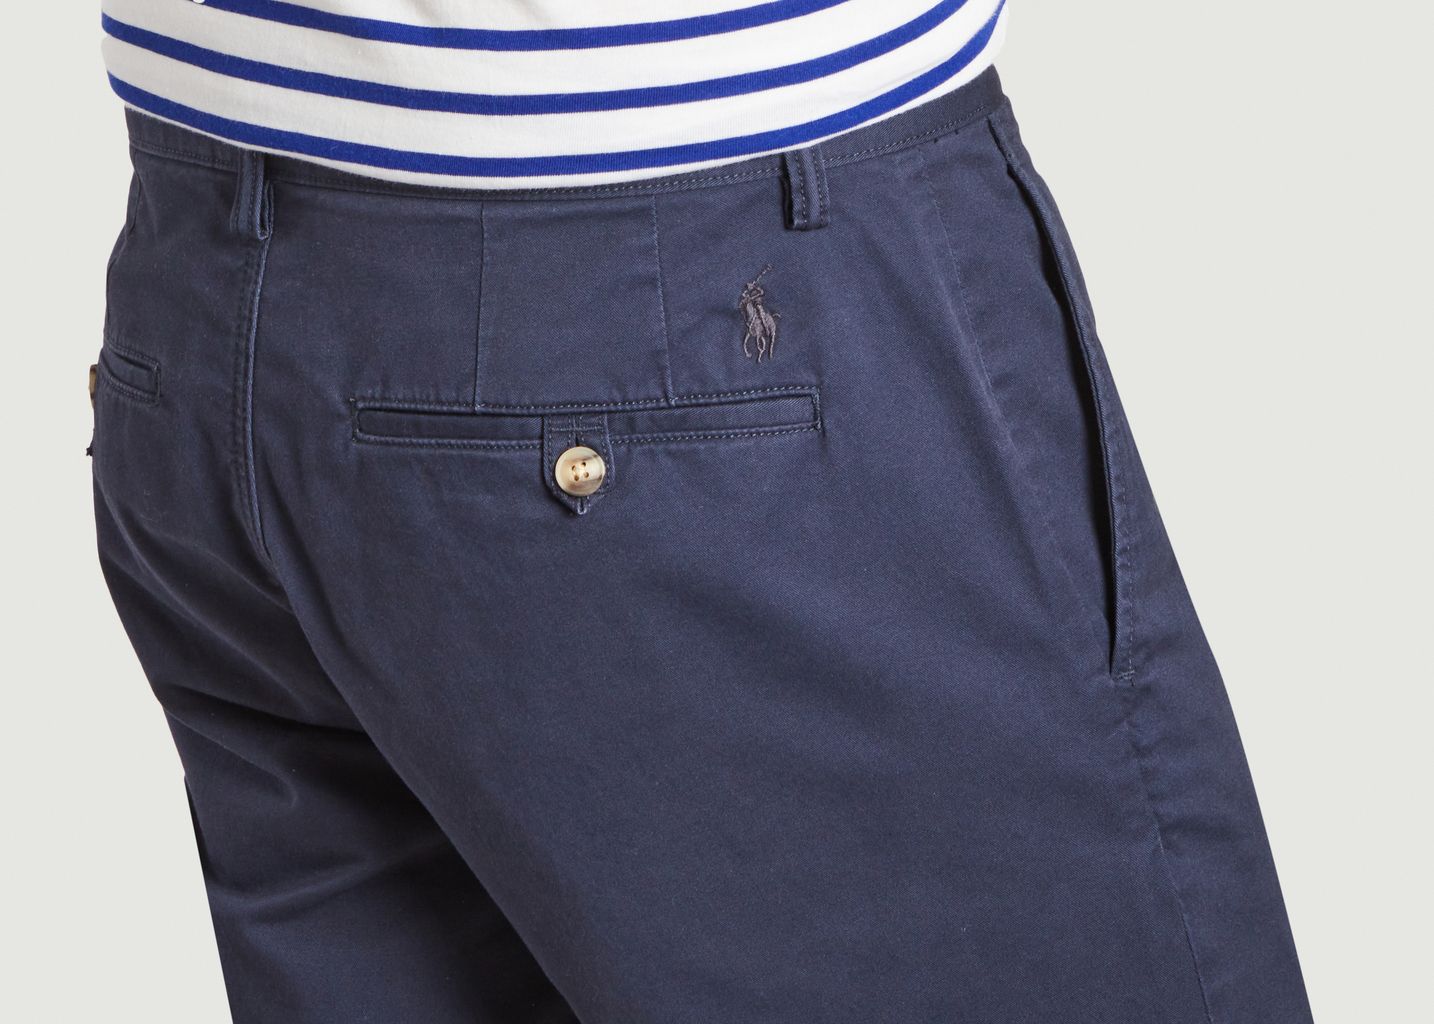 Chino shorts - Polo Ralph Lauren